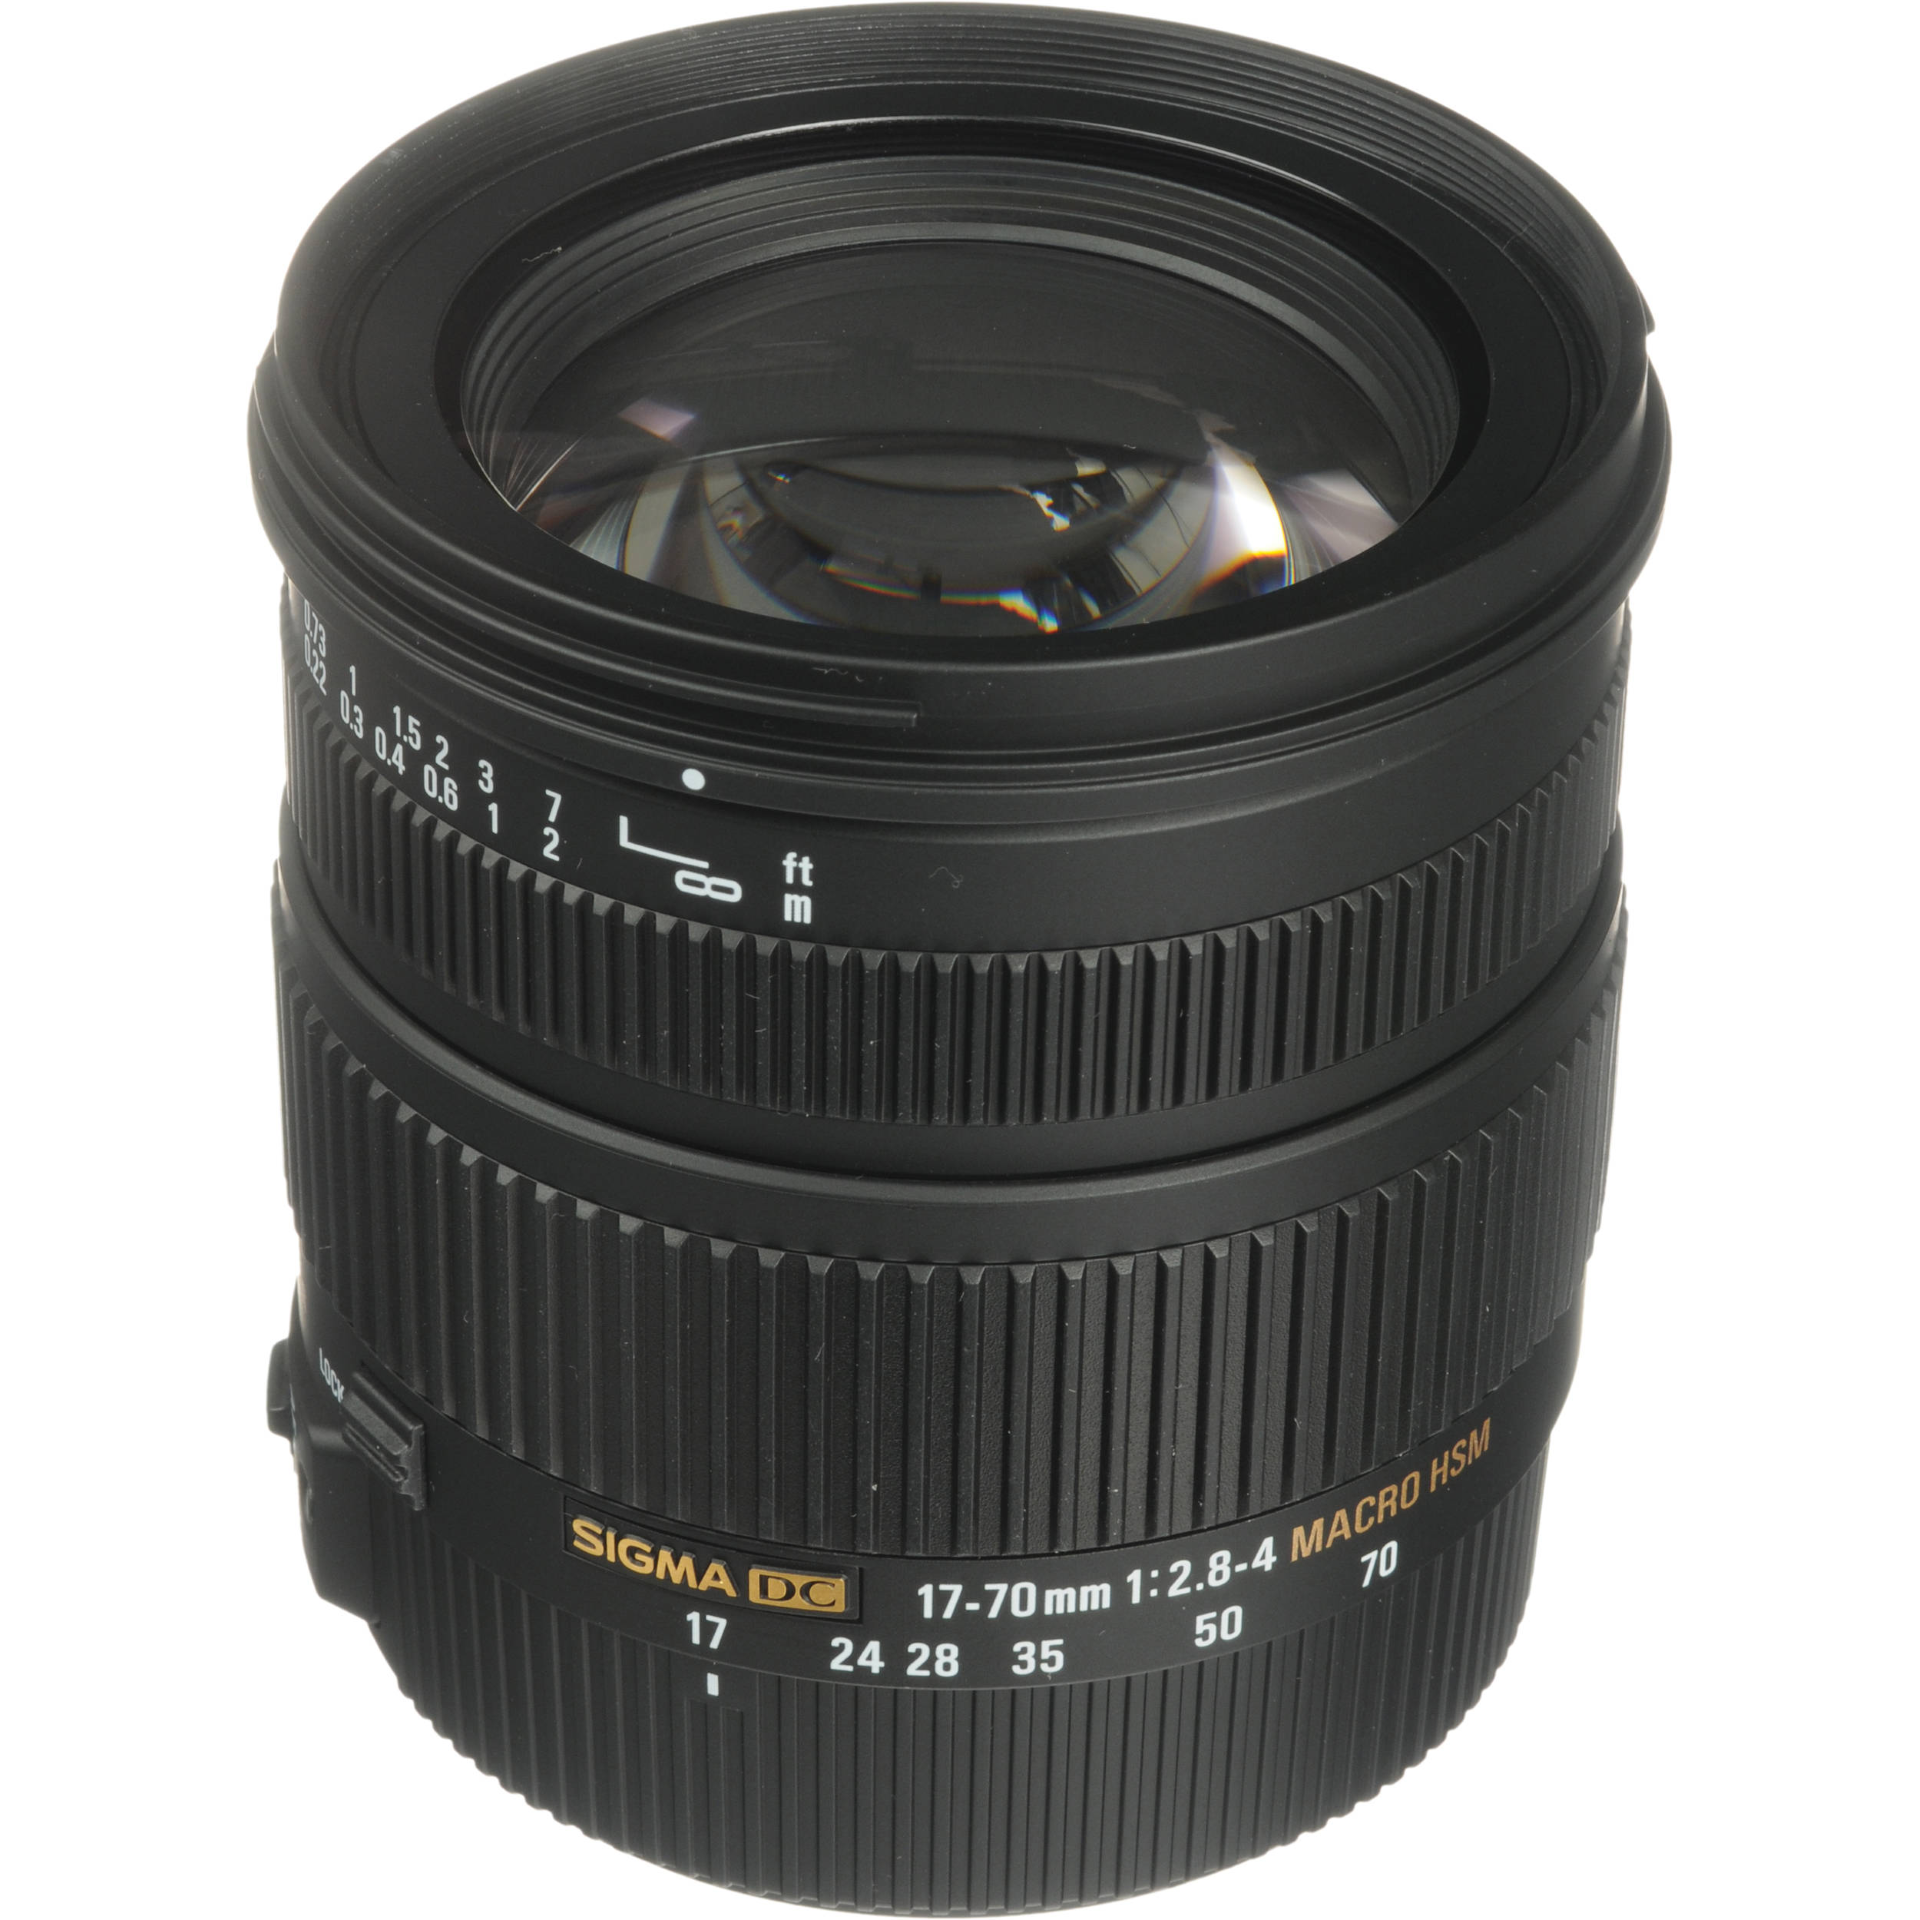 Объективы sigma macro. Sigma af 17-70mm f/2.8-4 DC macro os HSM Nikon f. Sigma 17-70mm f2.8-4. Sigma 17-70 2.8-4 Canon. Sigma DC 17-70mm 1:2.8-4 macro HSM.